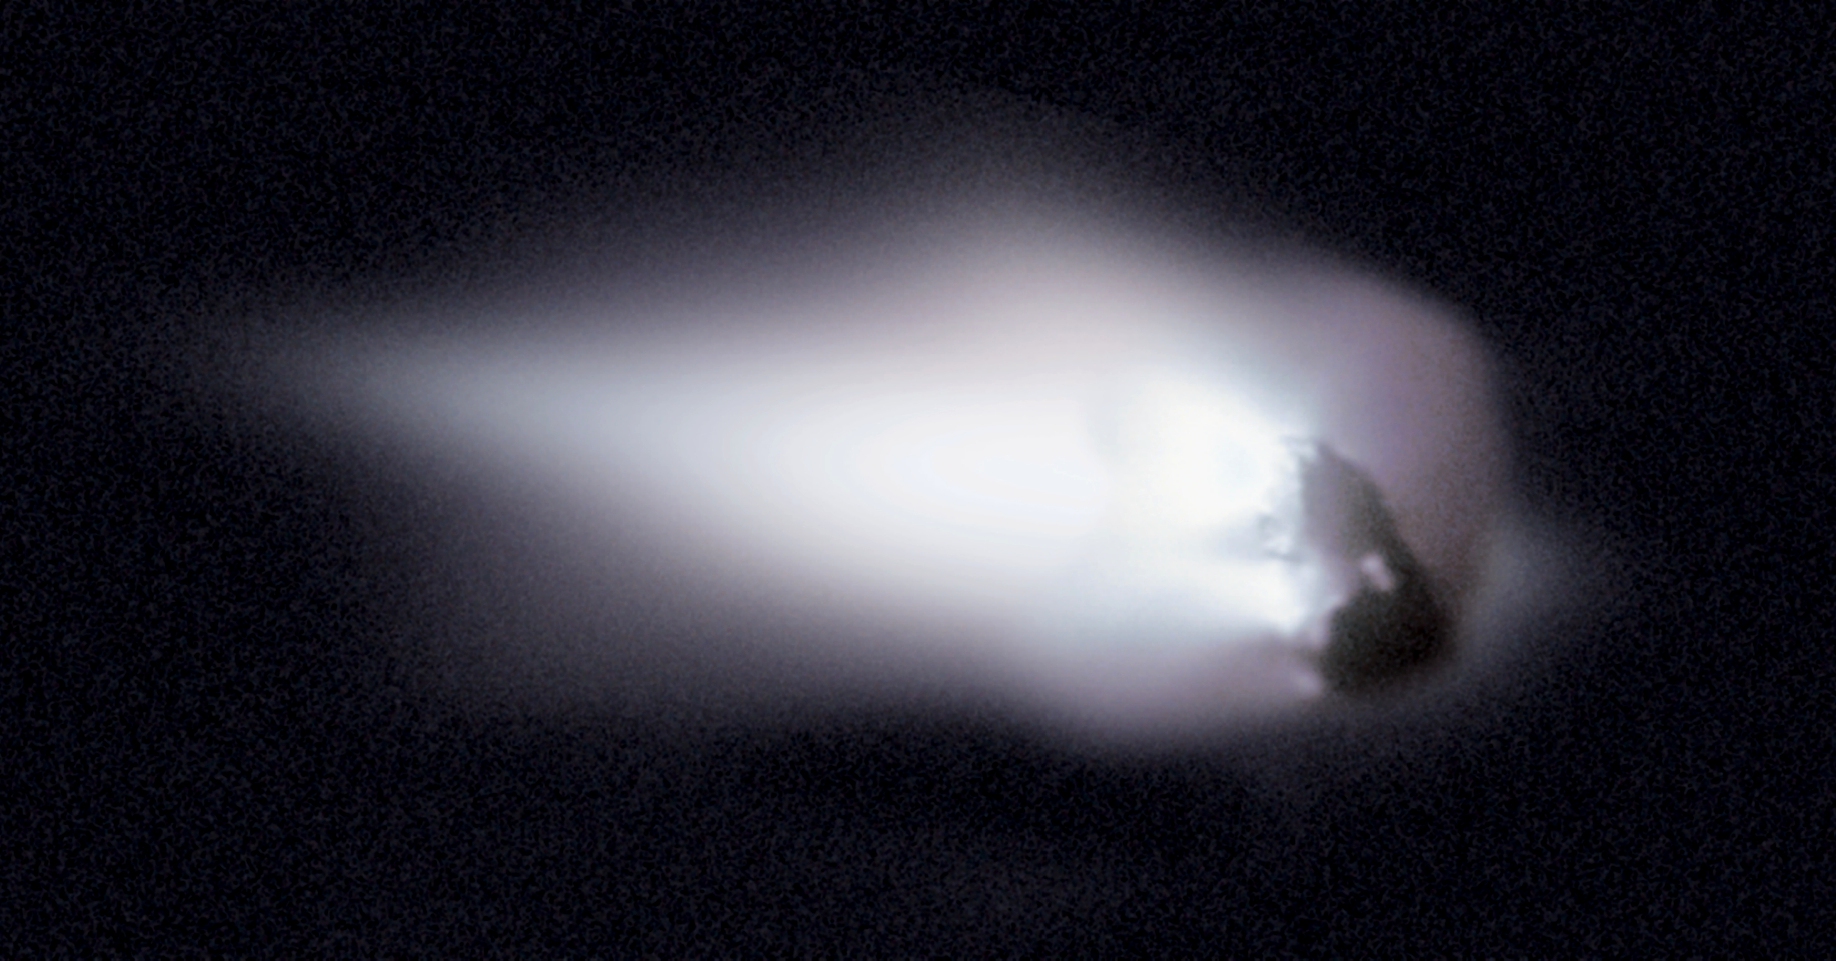 Le noyau de la comète de Halley, un iceberg dans l’espace 